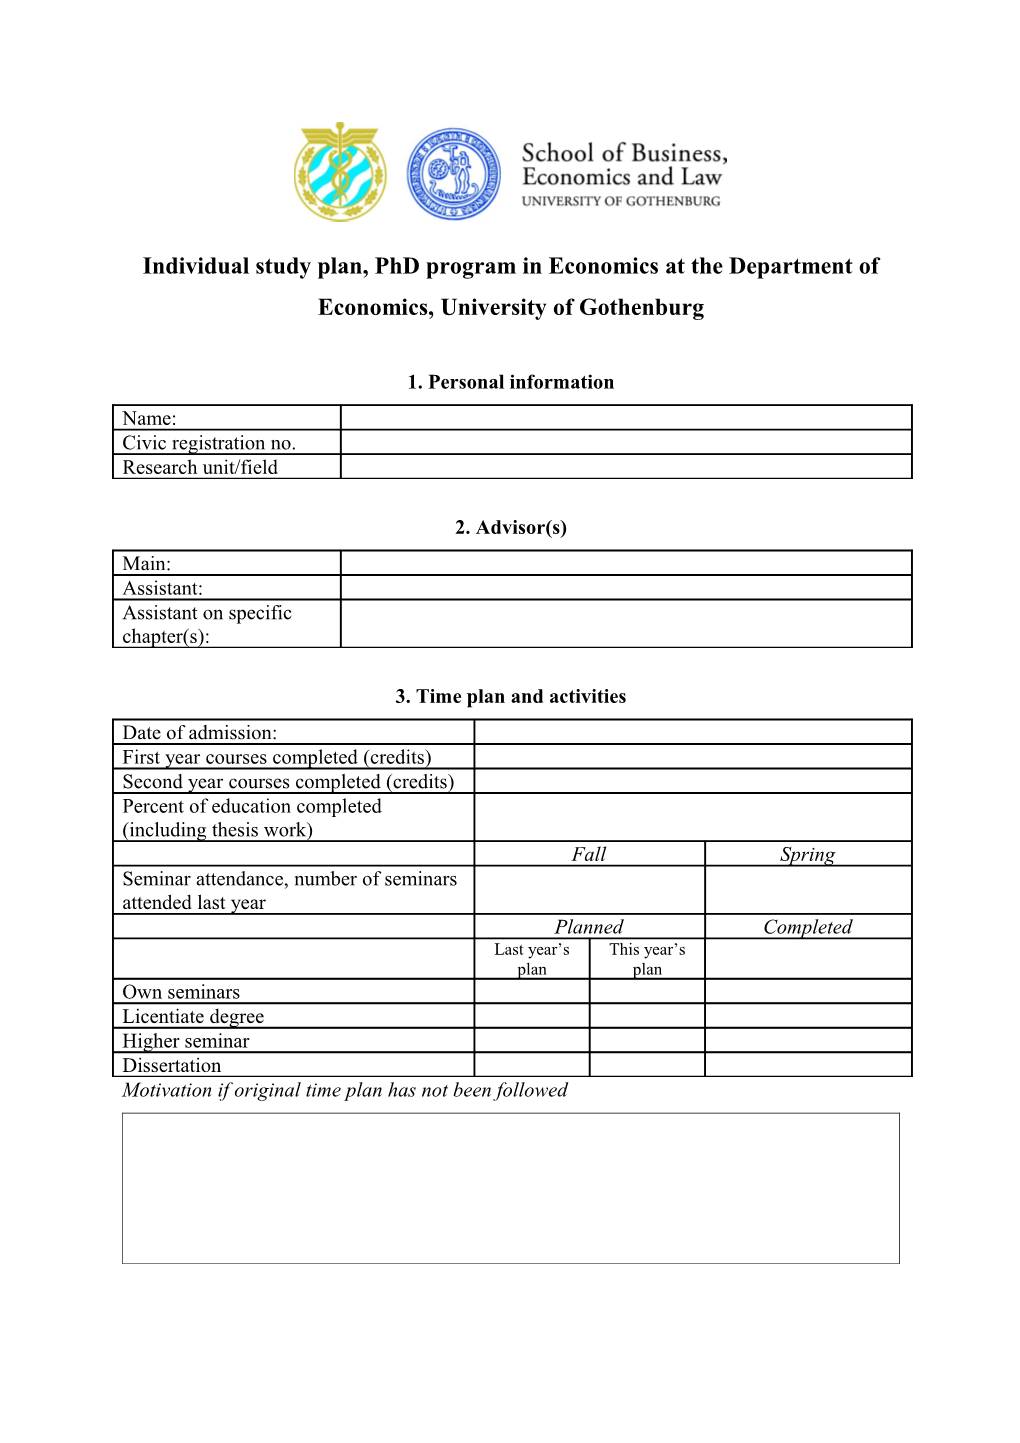 Individual Study Plan, Phd Program in Economics at the Department of Economics, University